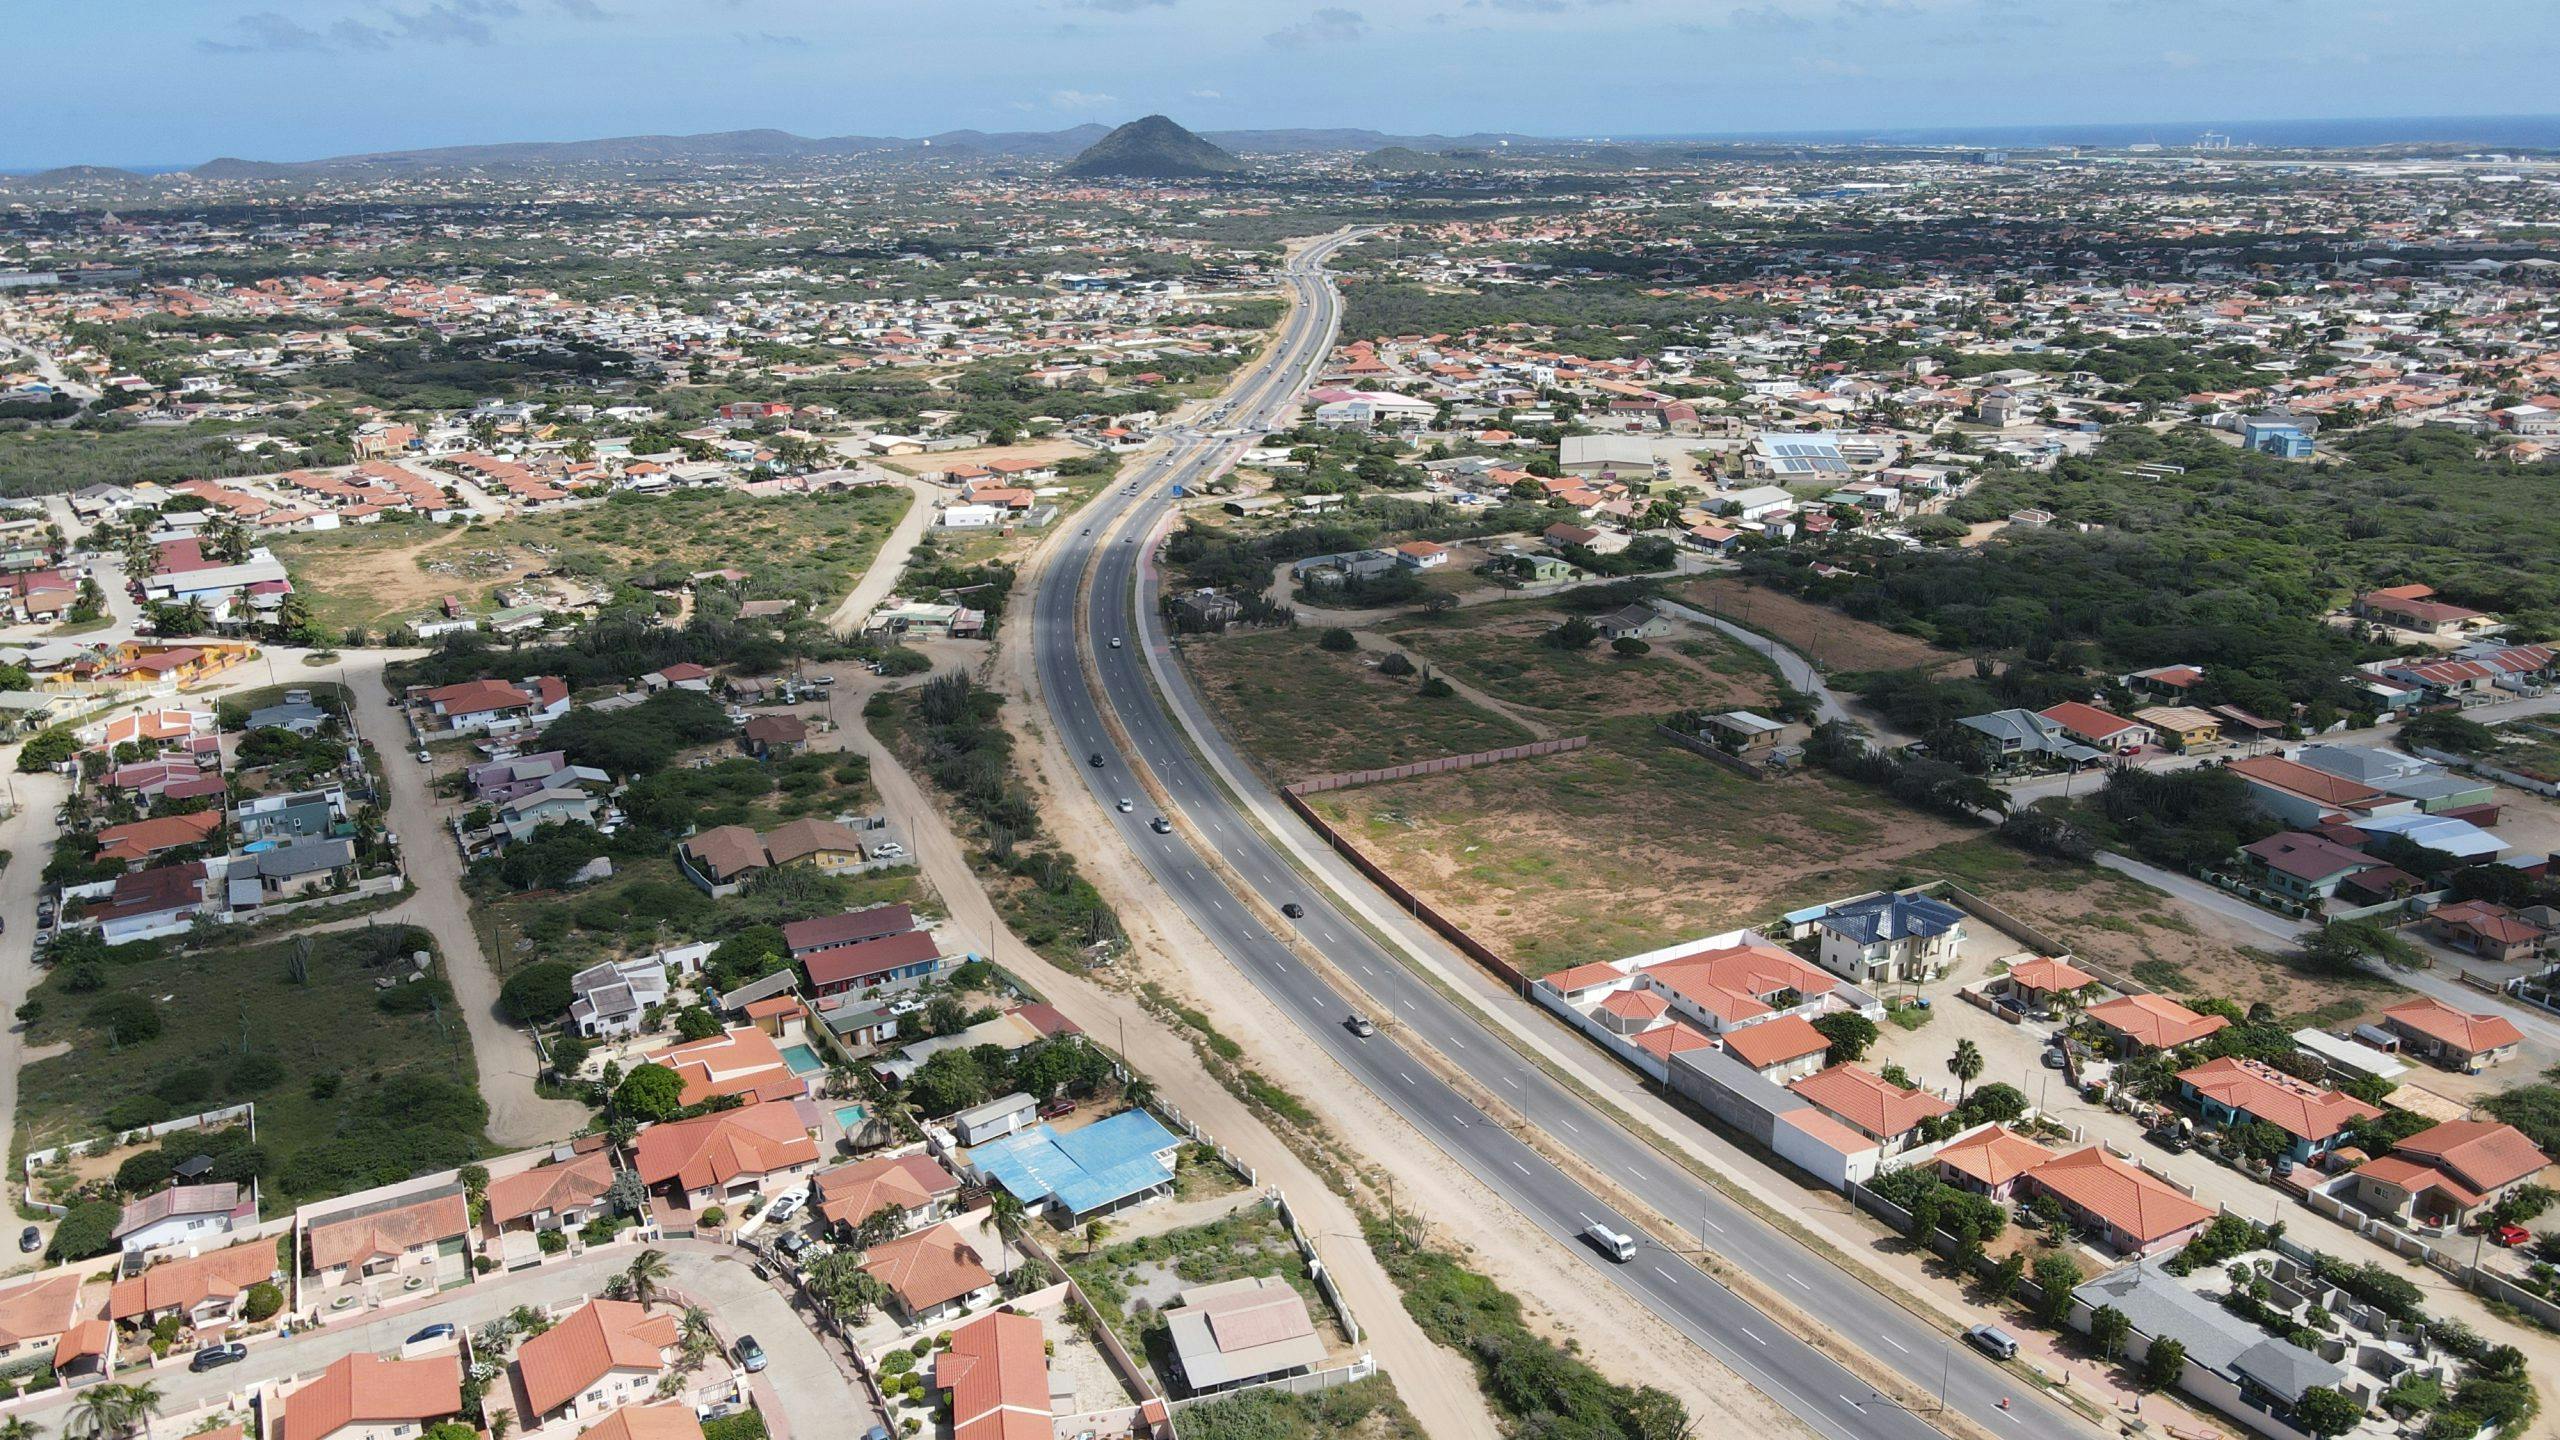 Plenary Americas acquires 100% interest in Aruba’s Watty Vos Boulevard image